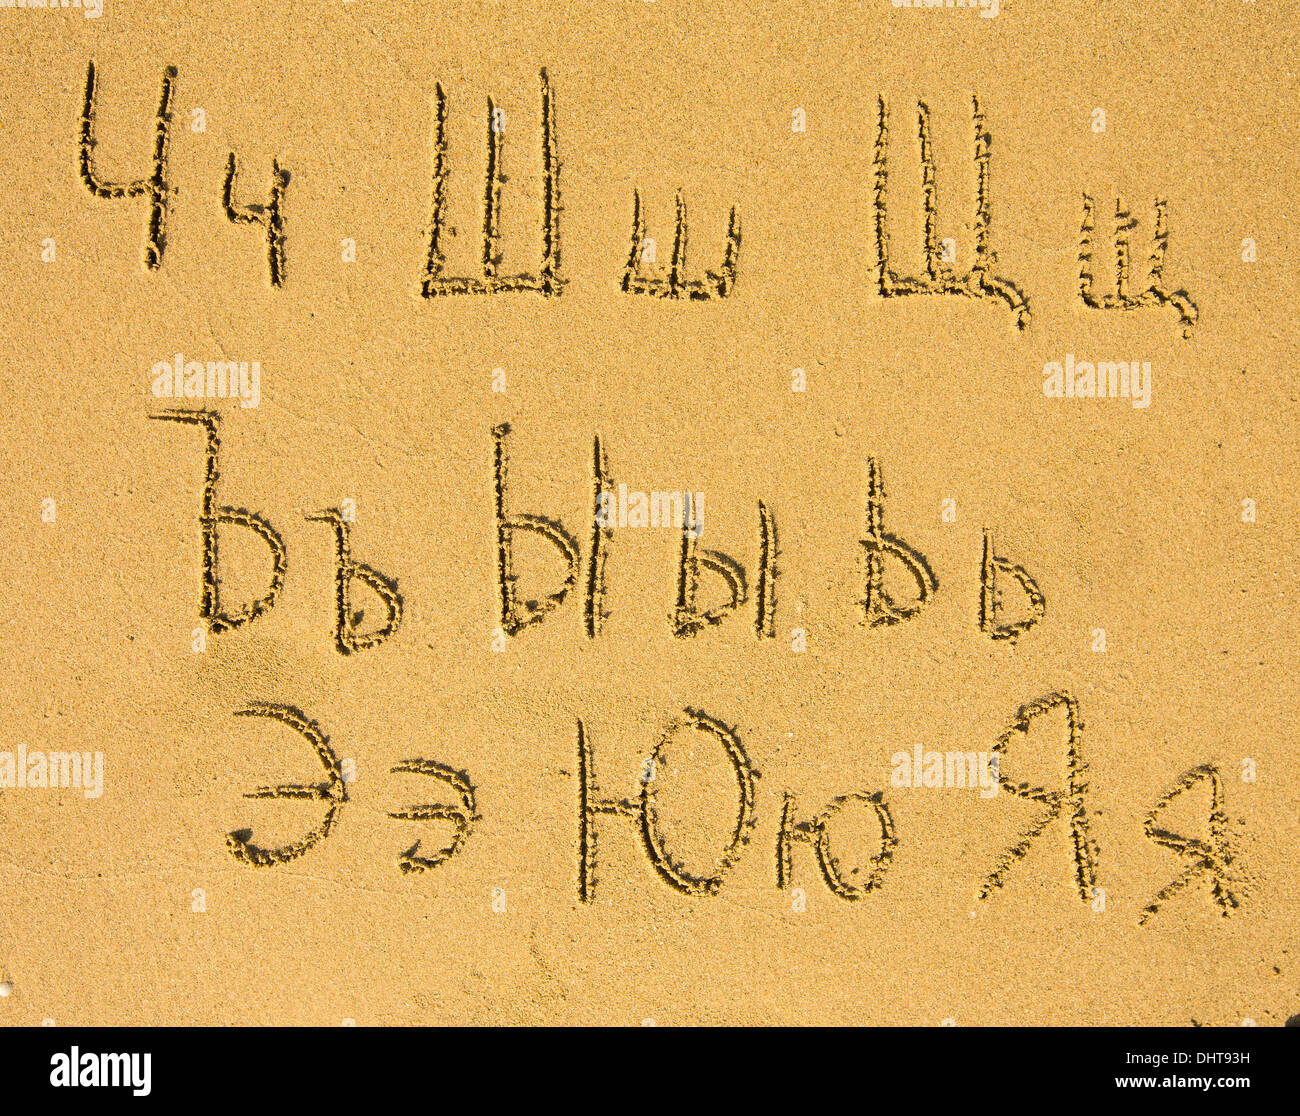 Russian alphabet (from Ch to Ja) written on a sand beach. Stock Photo